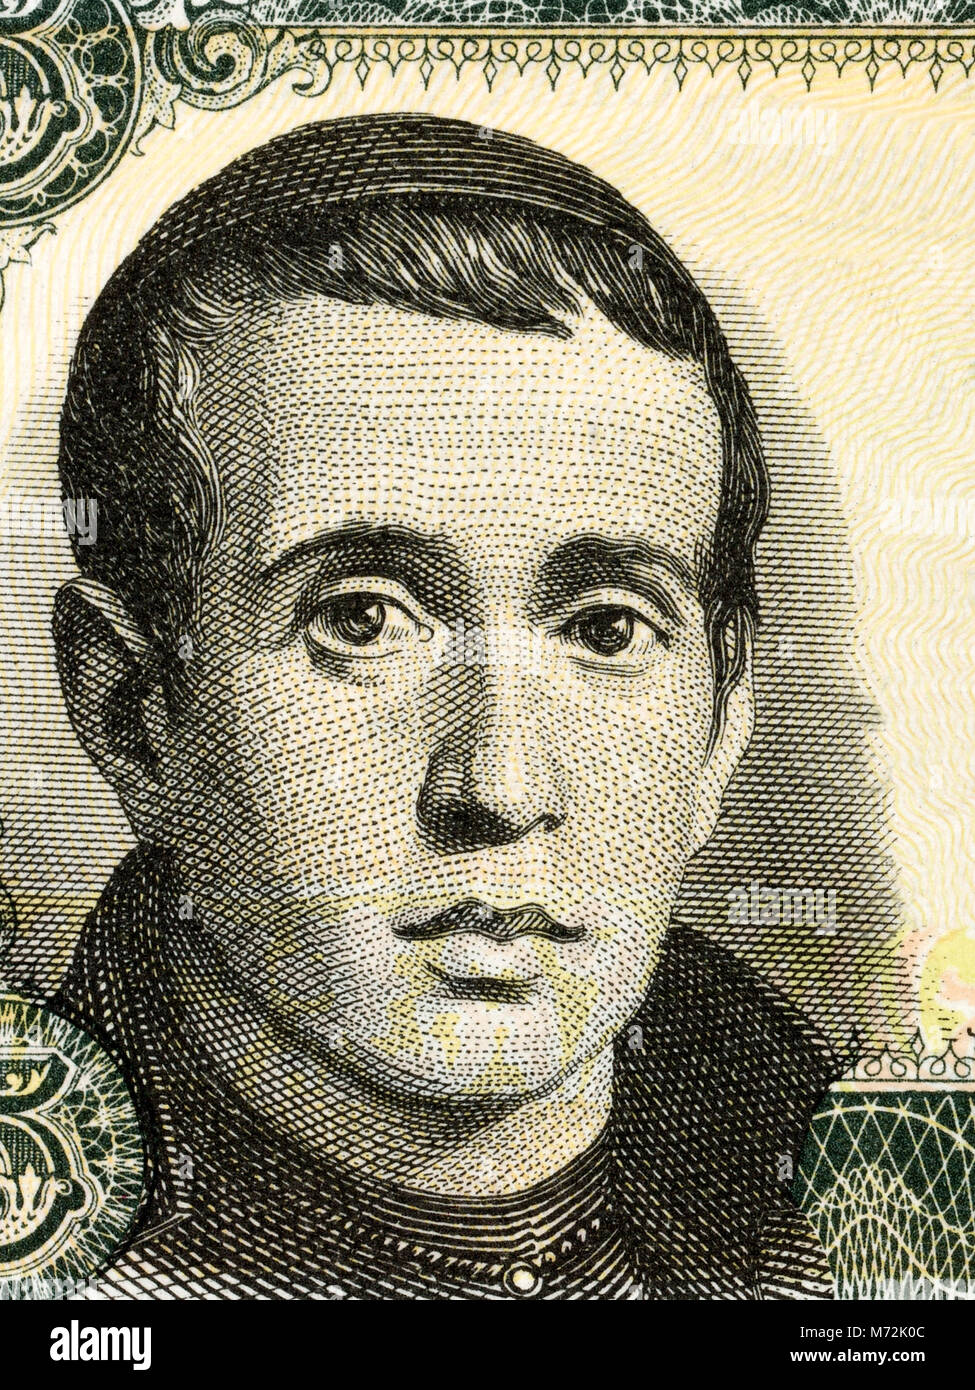 Jaime Balmes portrait from Spanish money Stock Photo